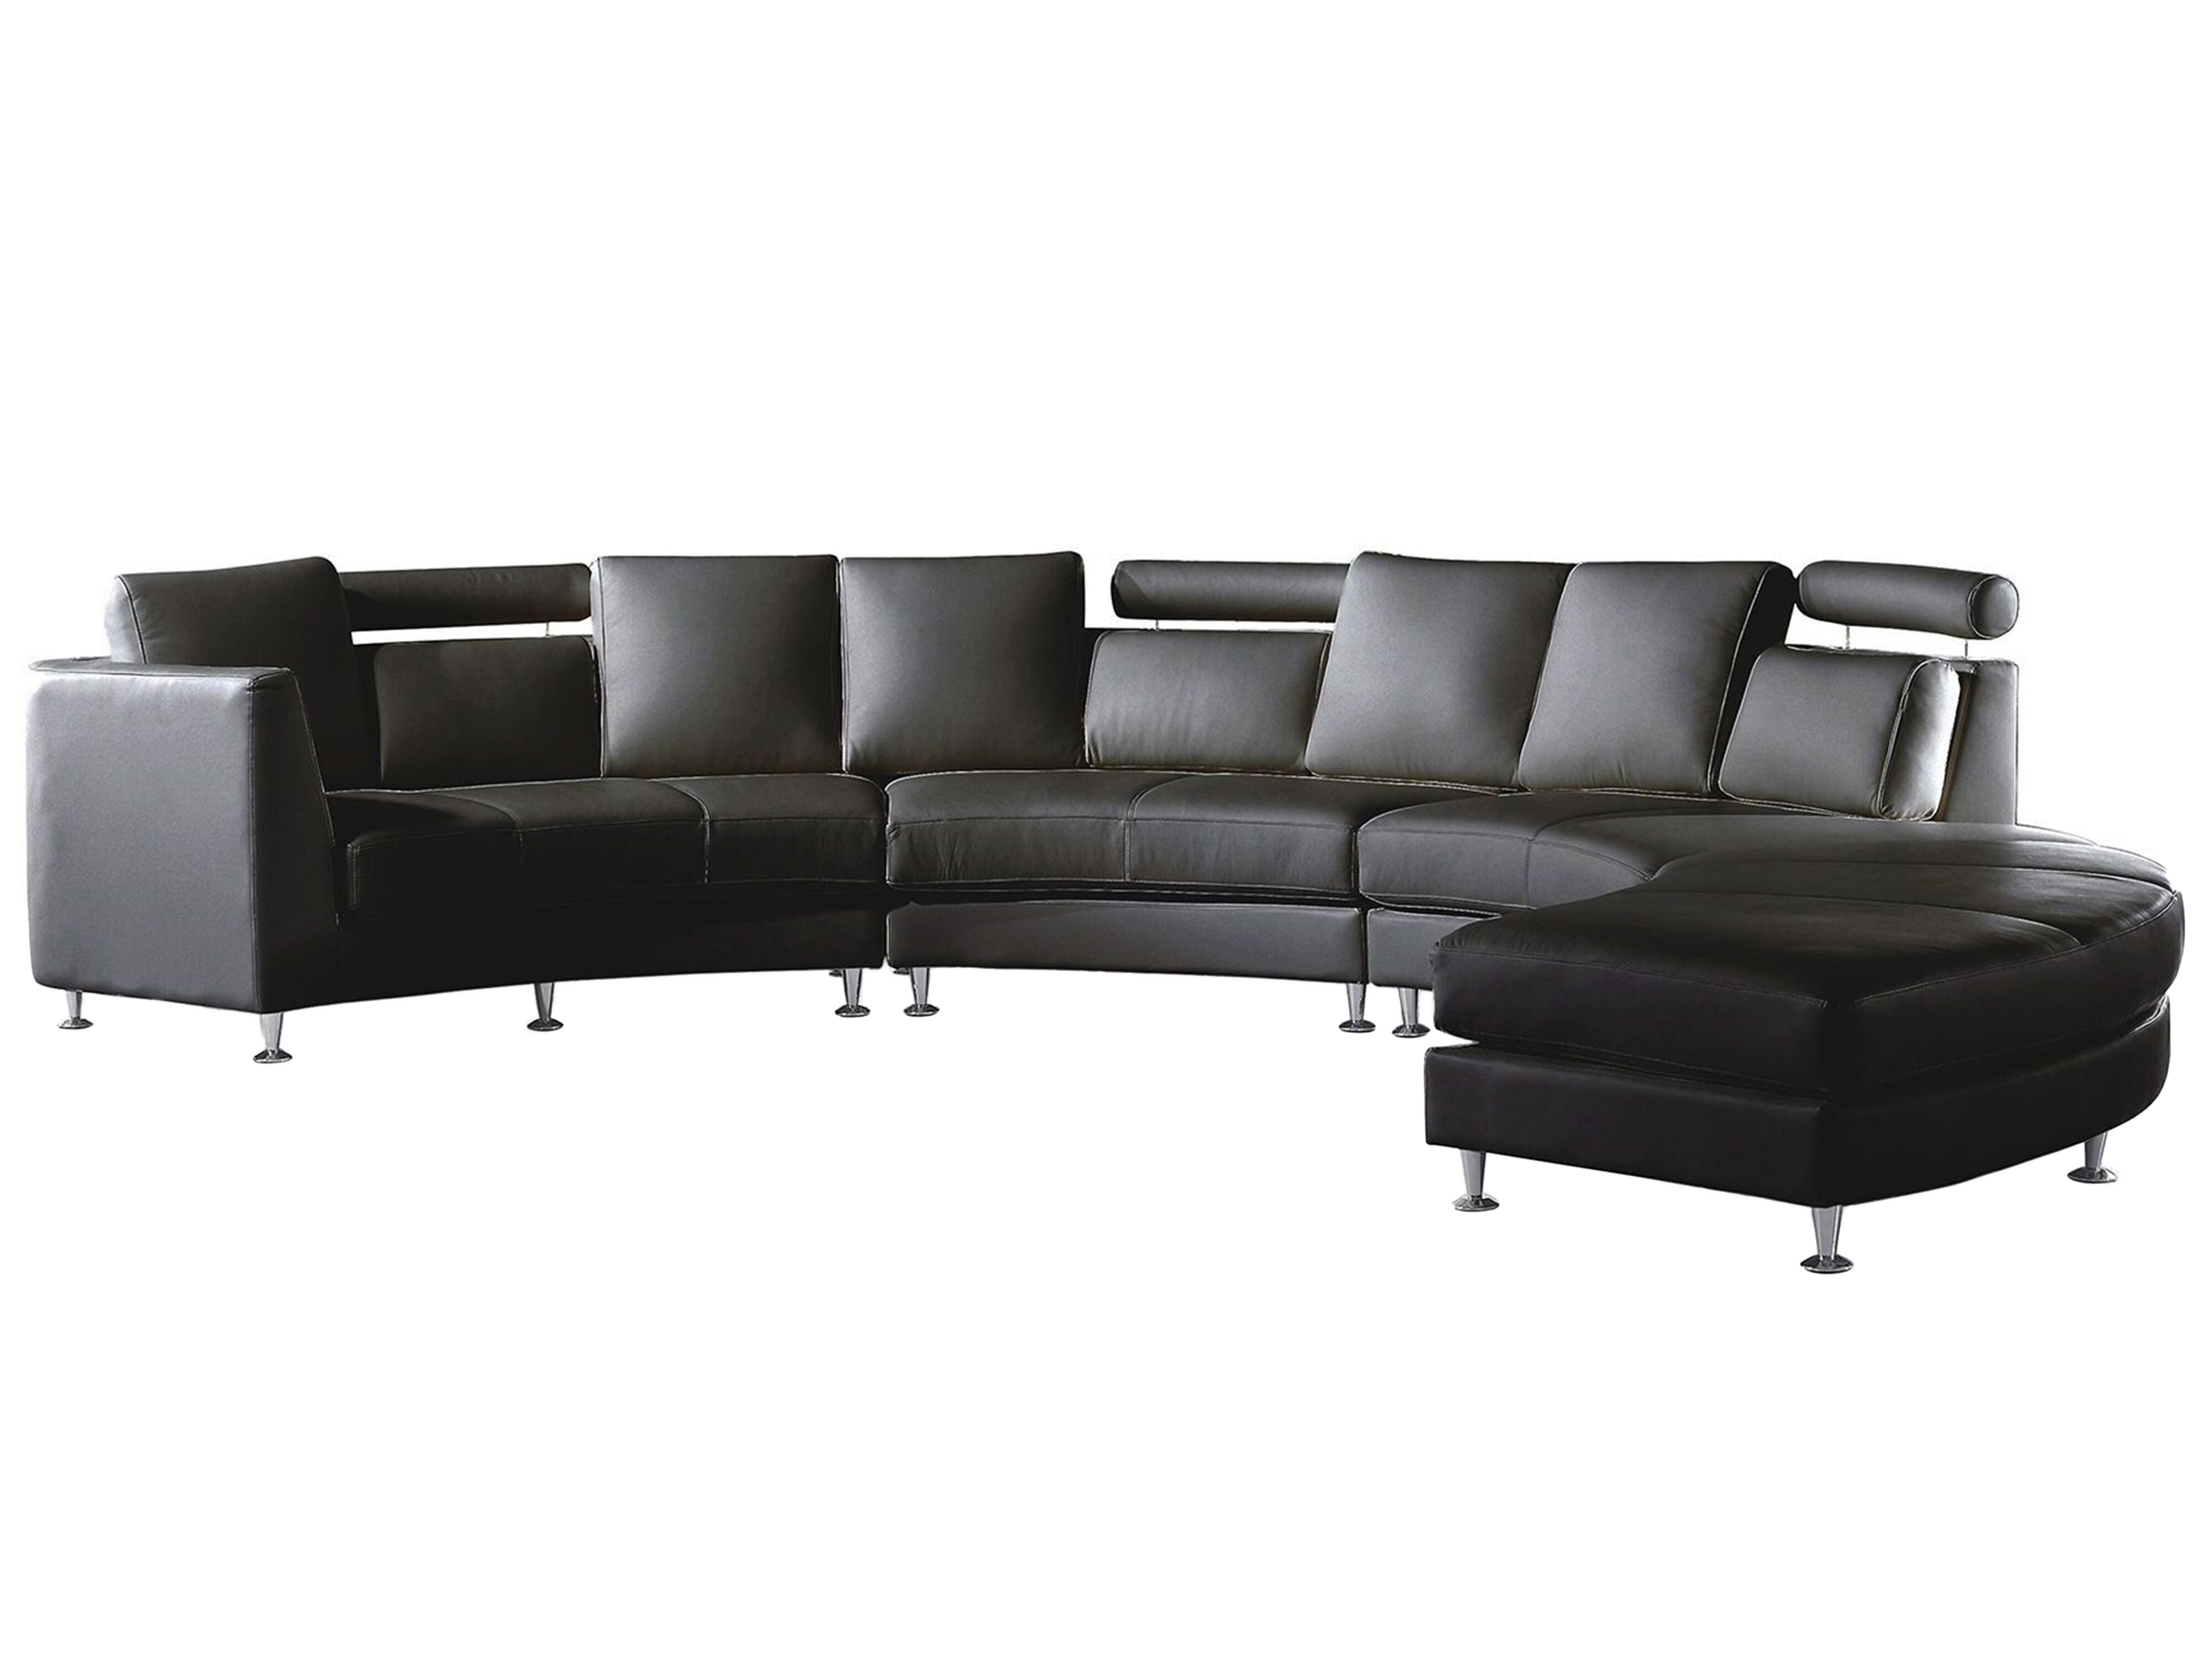 7 Seater Curved Leather Modular Sofa